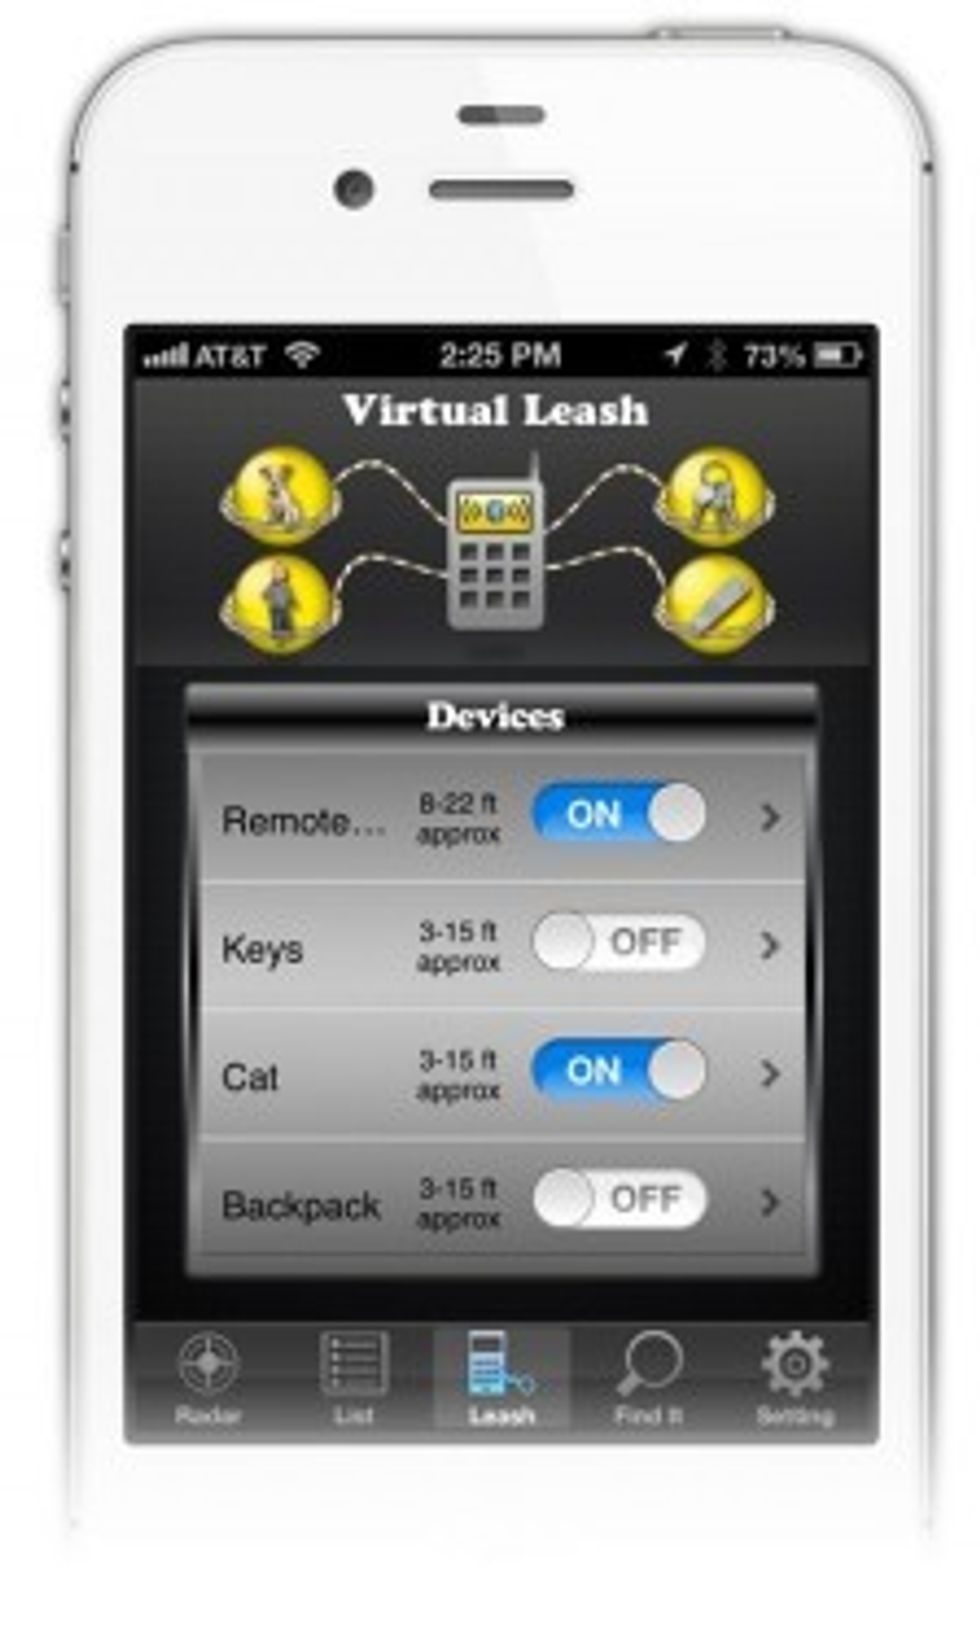 Iphone-virtual-leash-sticknfind-224x375